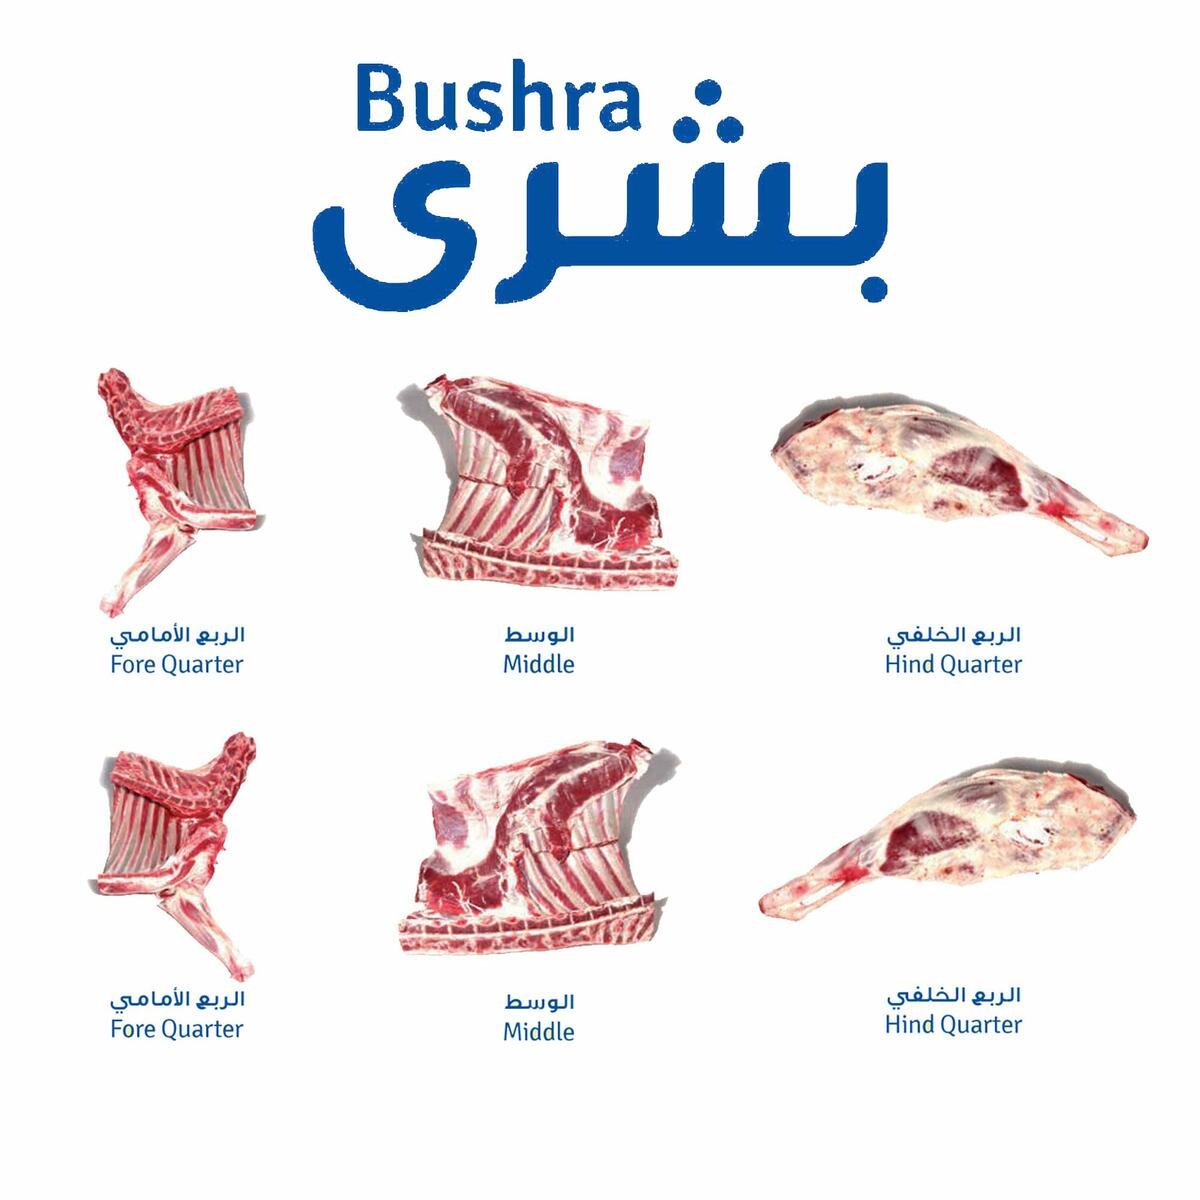 Bushra Lamb 6 Way Cut Whole Bone In 9-11 kg